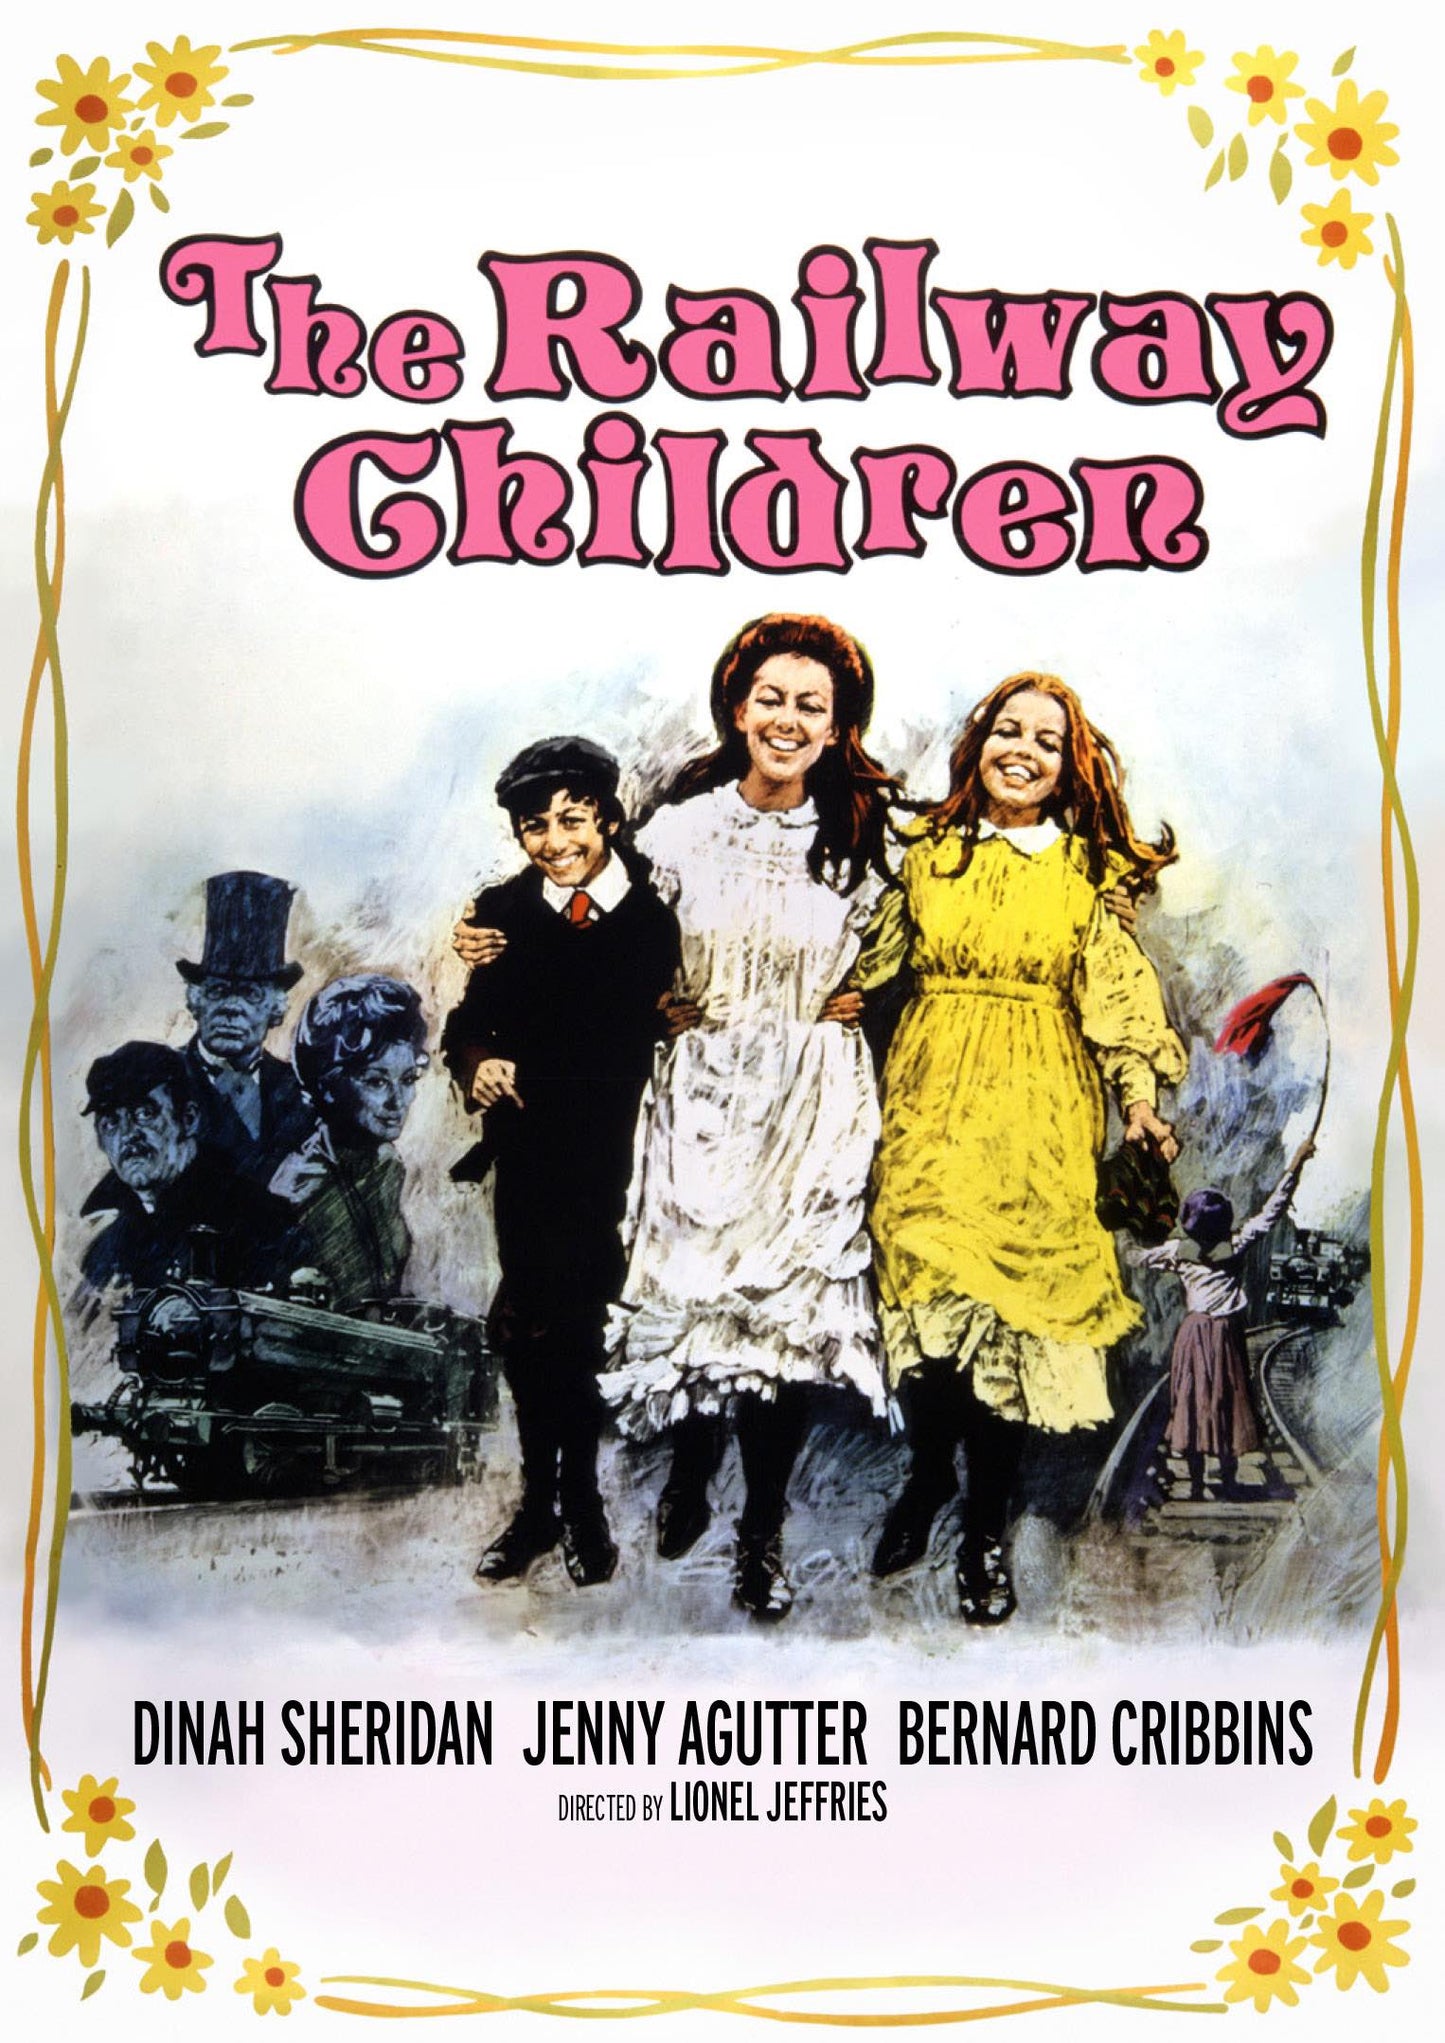 Railway Children cover art